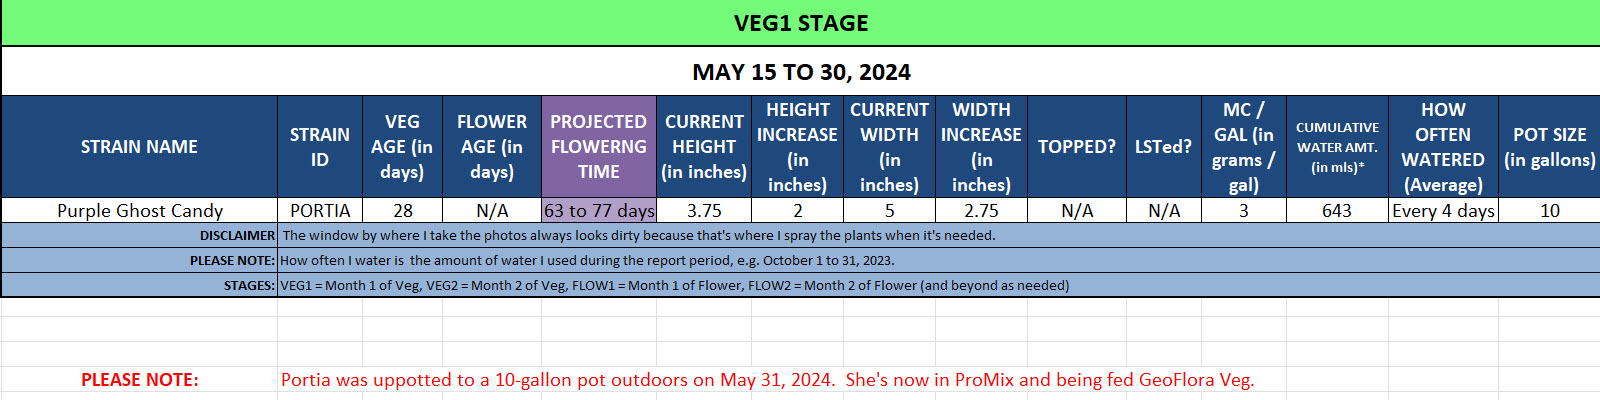 420 Update - May 15 to 31, 2024.jpg